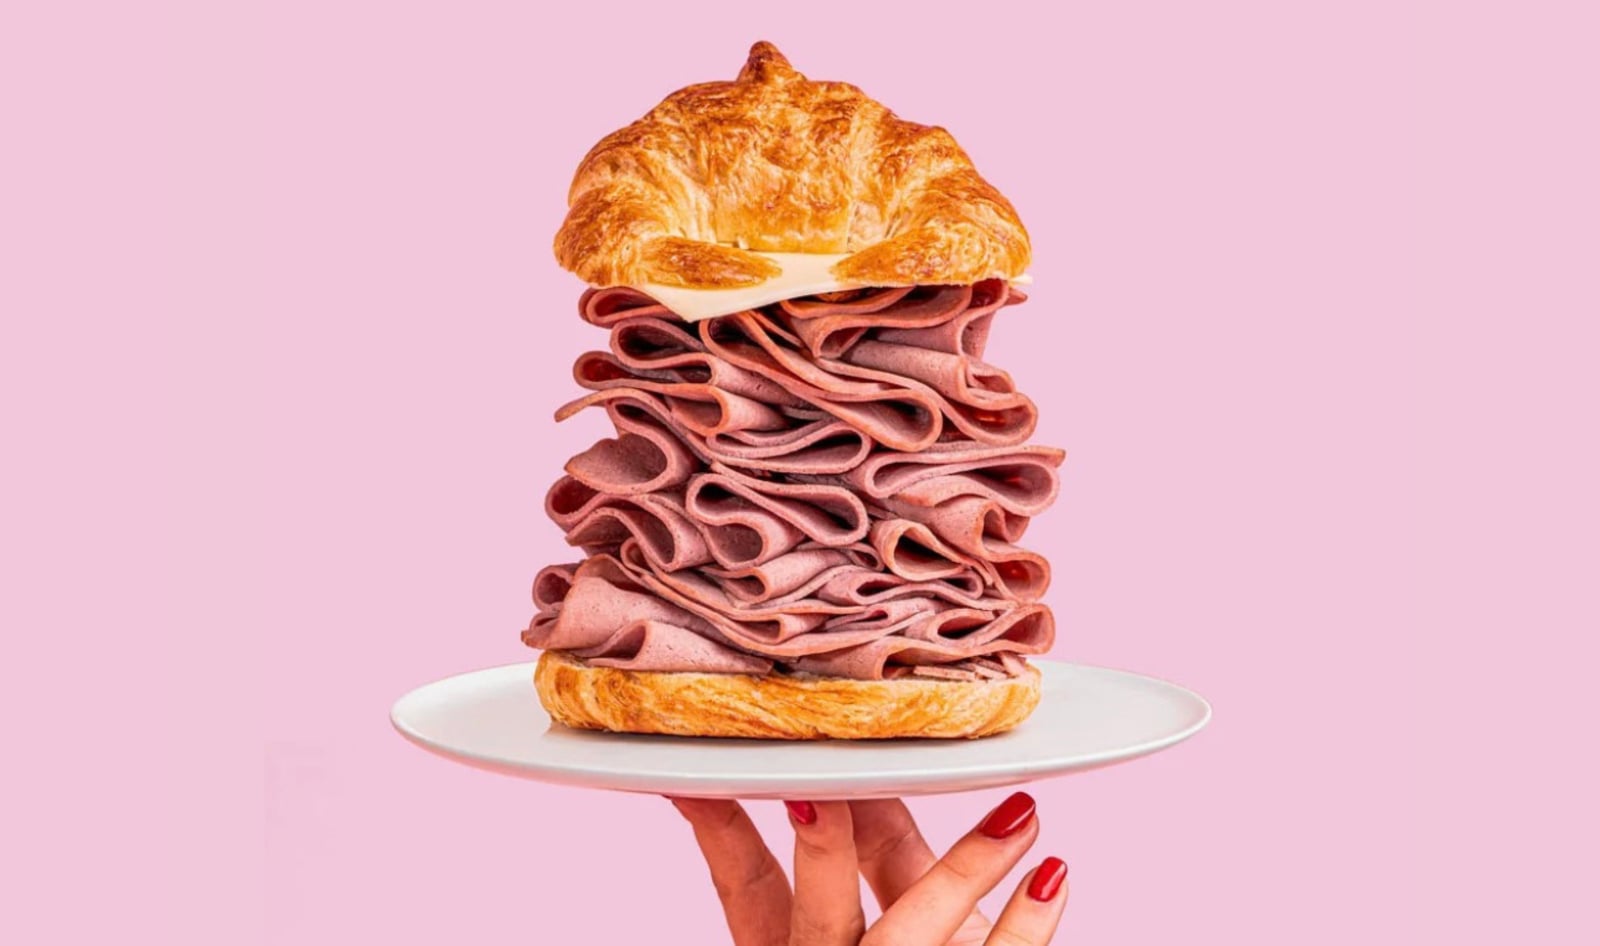 Natalie Portman-Backed La Vie Is Taking on Big Pork With Vegan Ham